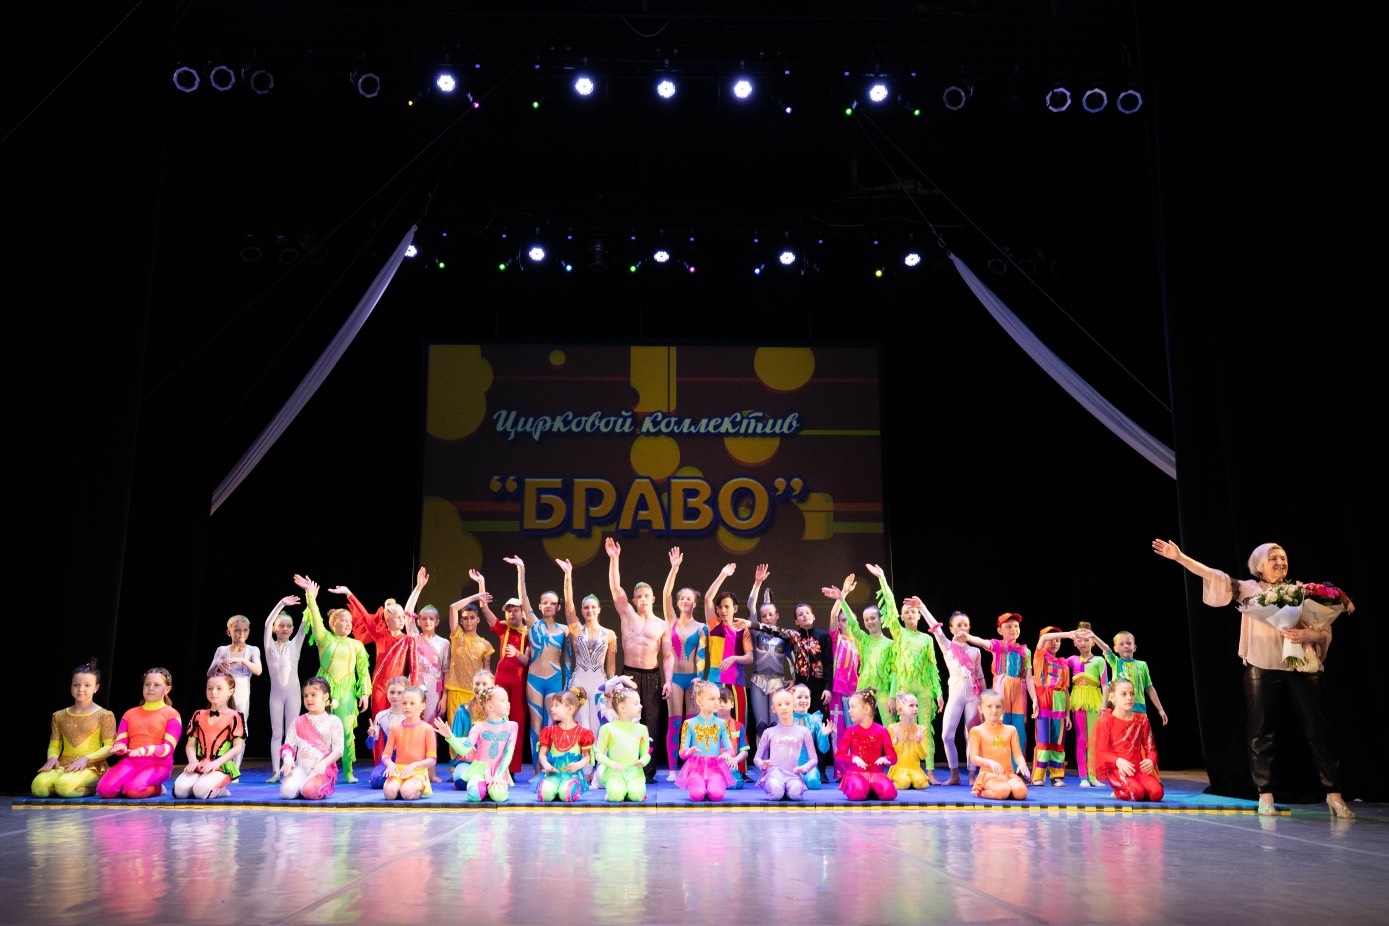 Отчетный концерт Образцового циркового коллектива «Браво»